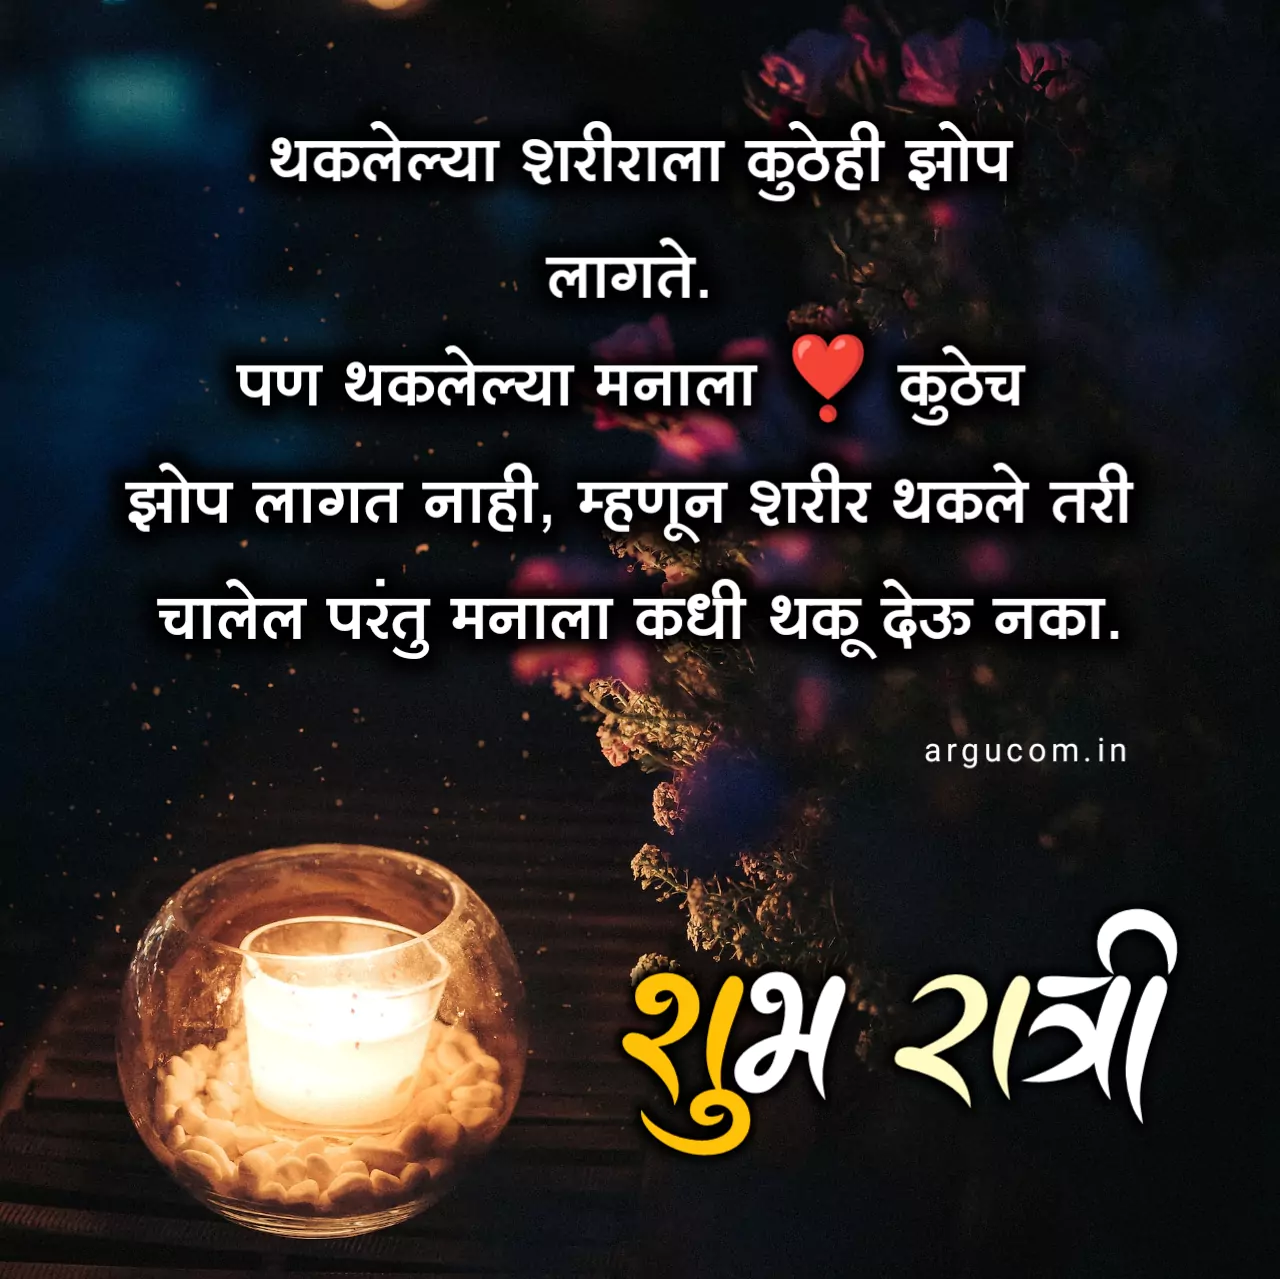 Good night message in marathi